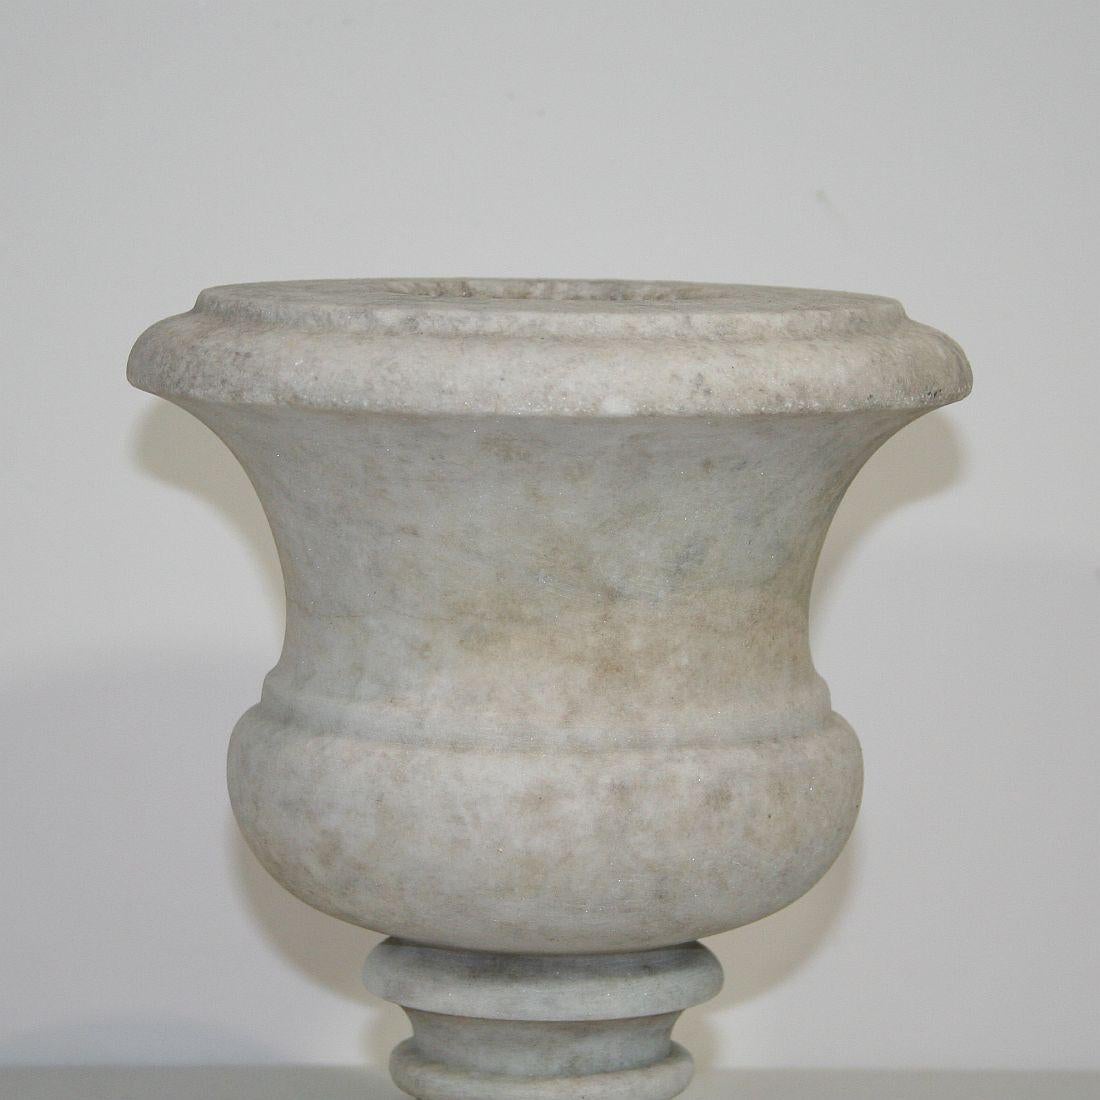 Rare white marble vase garden urn. Beautiful decorative centrepiece.
England, circa 1800-1850.
Weathered.










